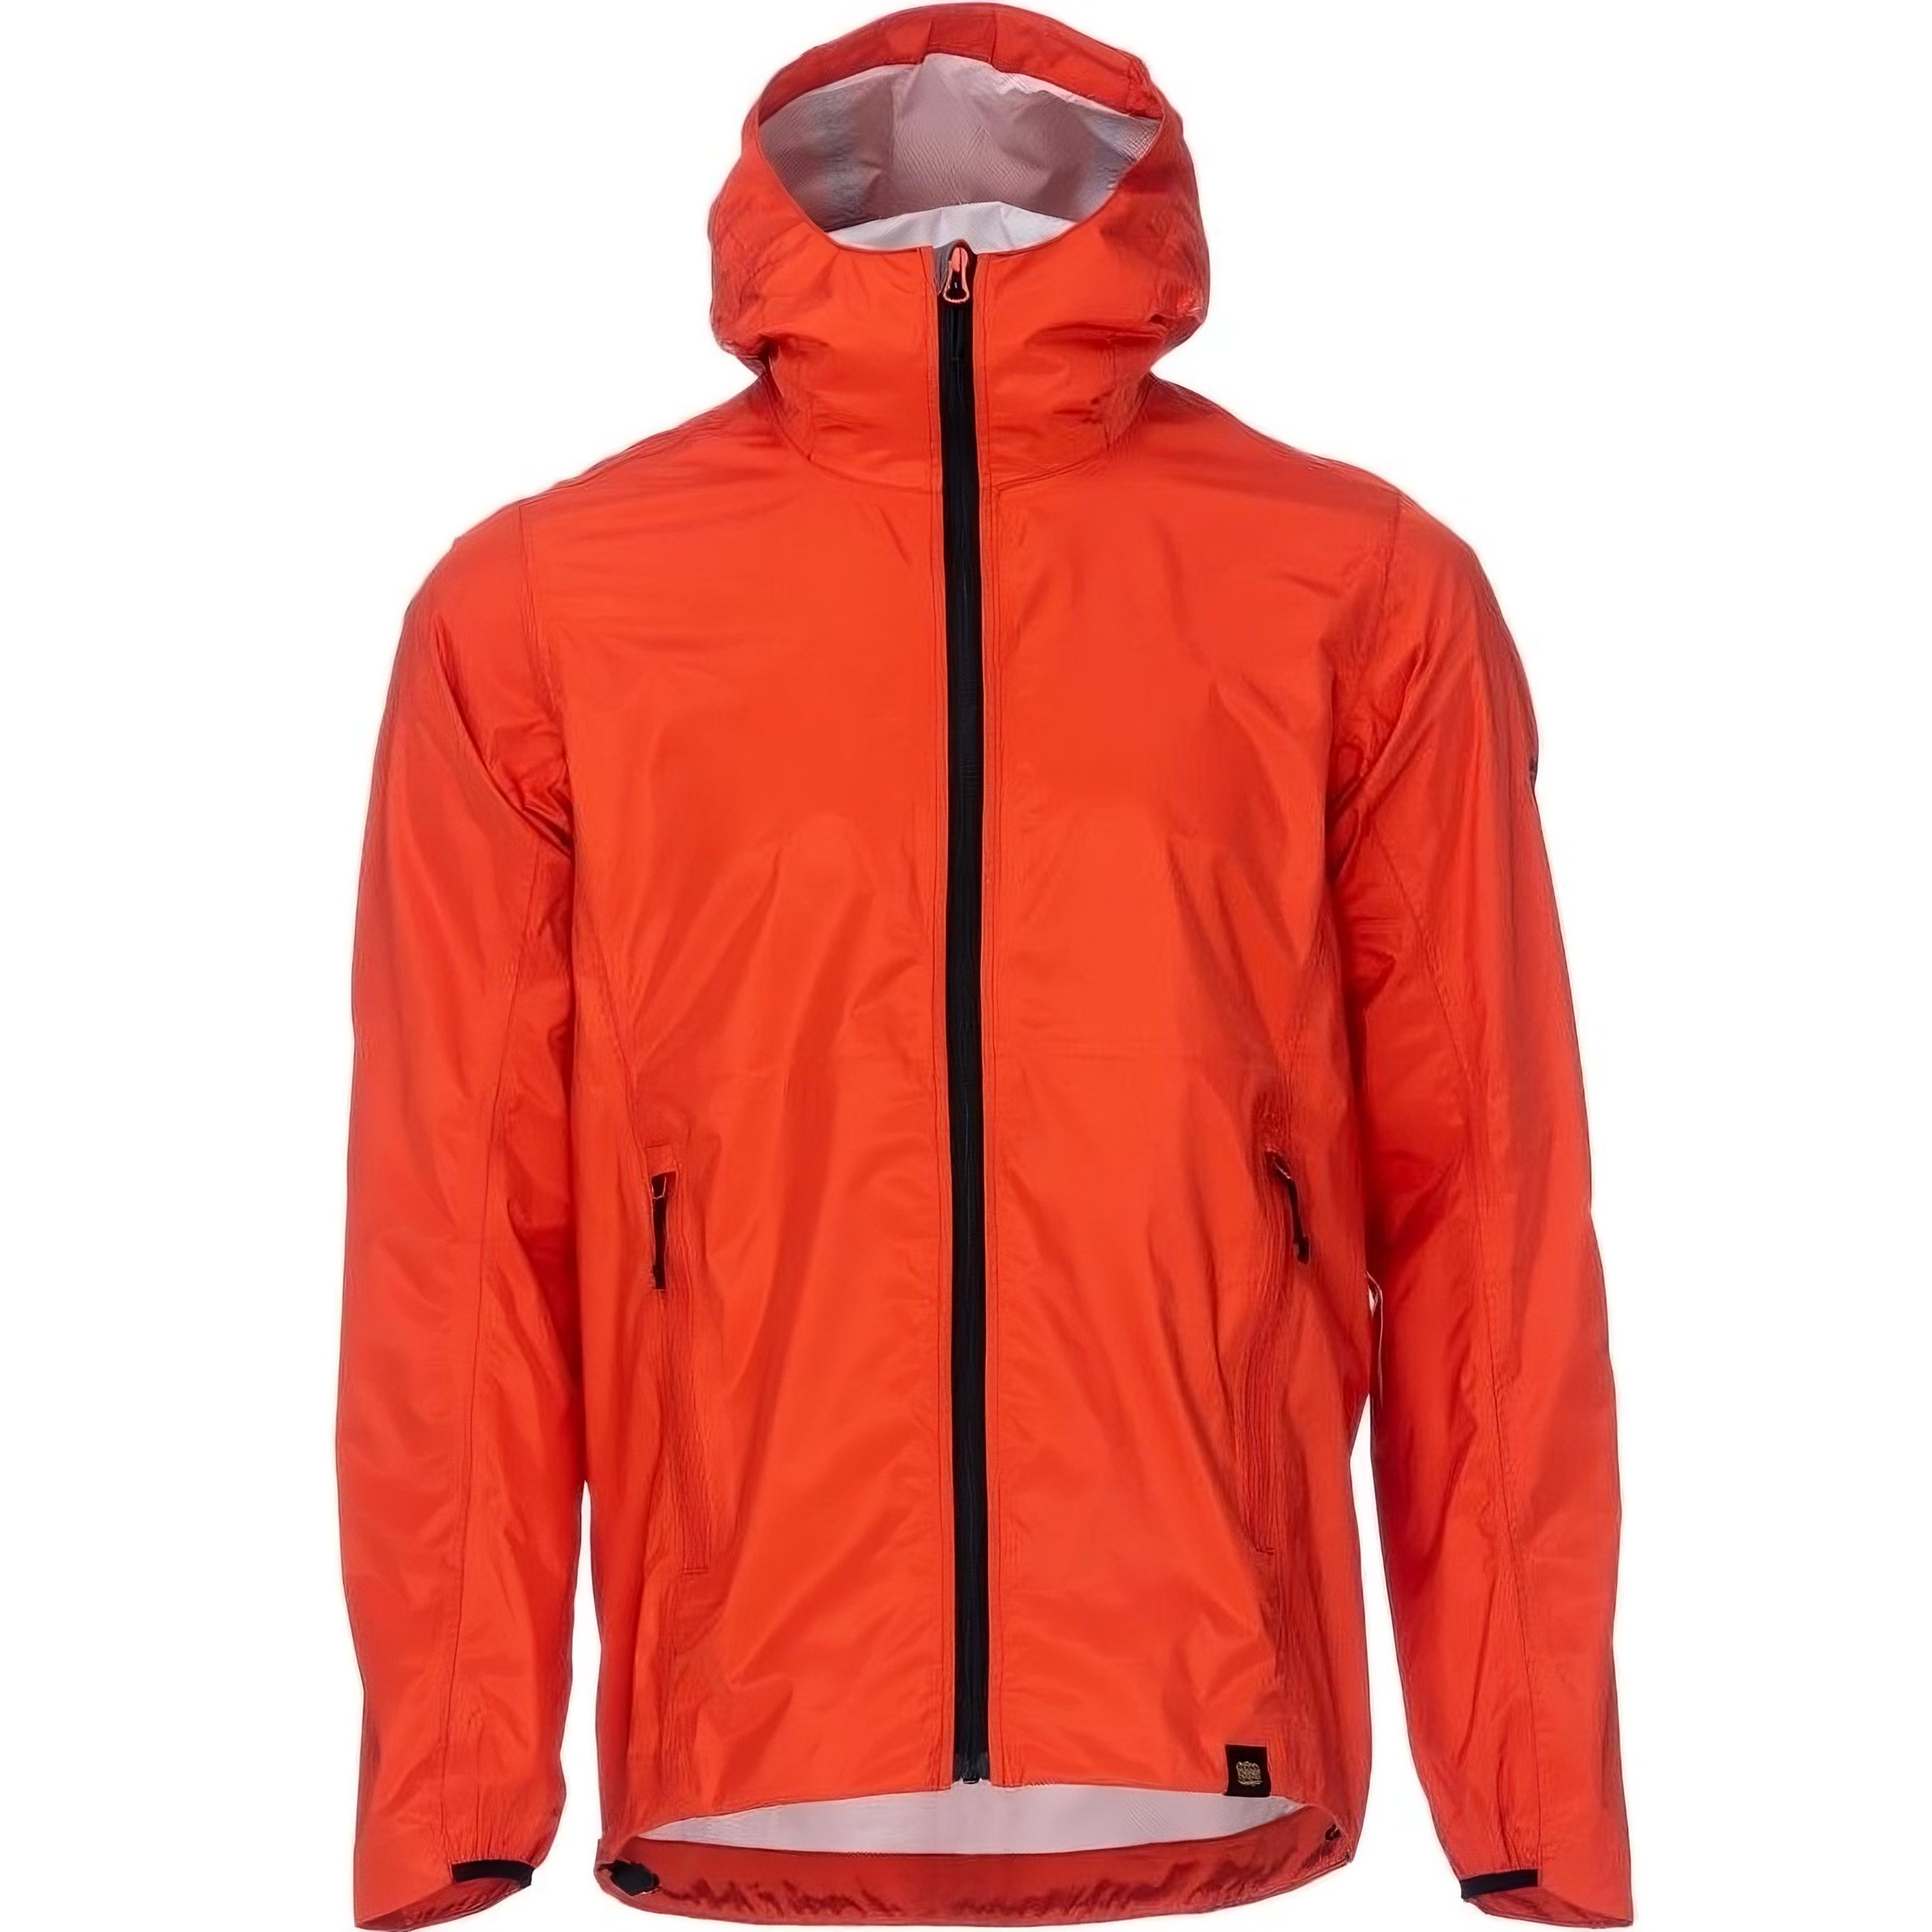 Куртка мужская Turbat Isla Mns orange red XXXL красный фото 1